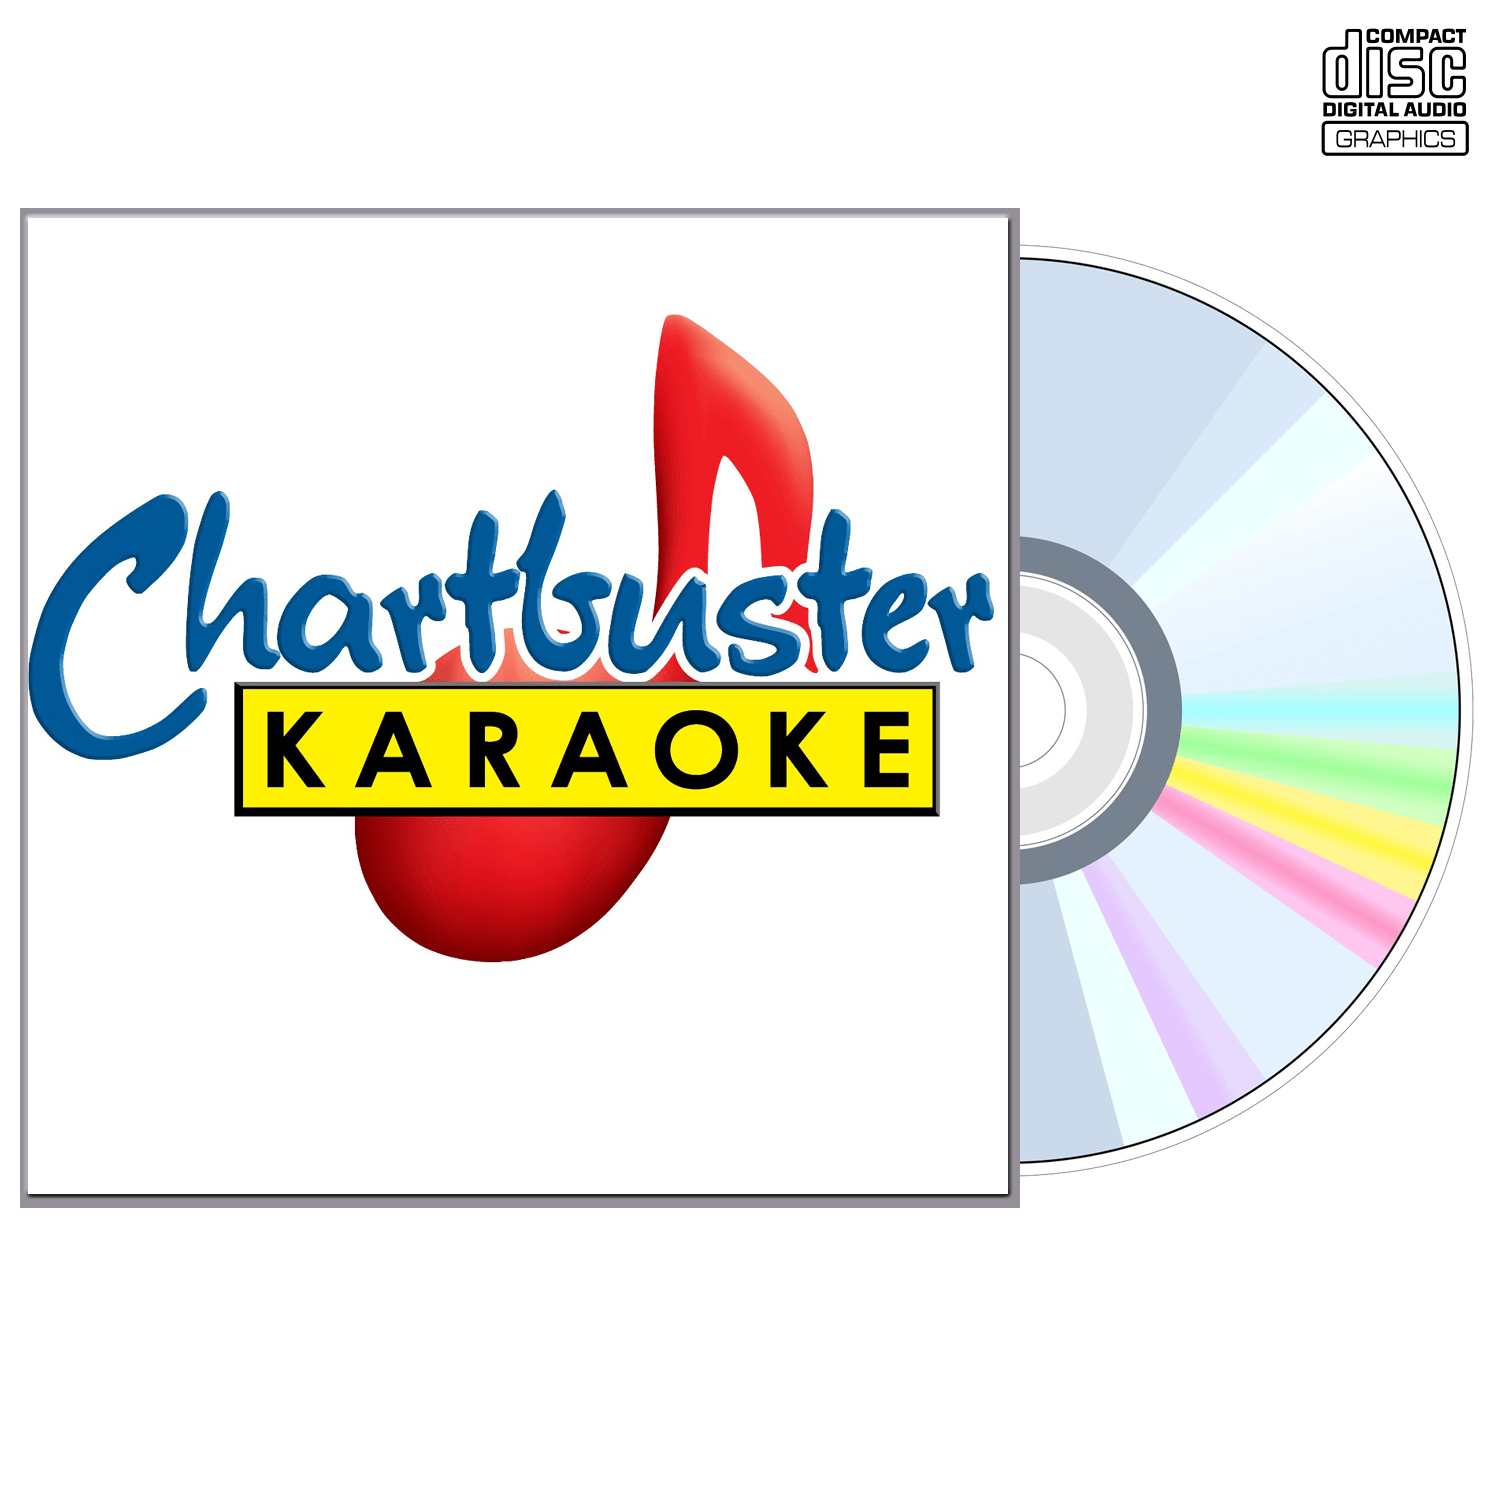 Ultimate 90's Collection Vol 11 - CD+G - Chartbuster Karaoke - Karaoke Home Entertainment